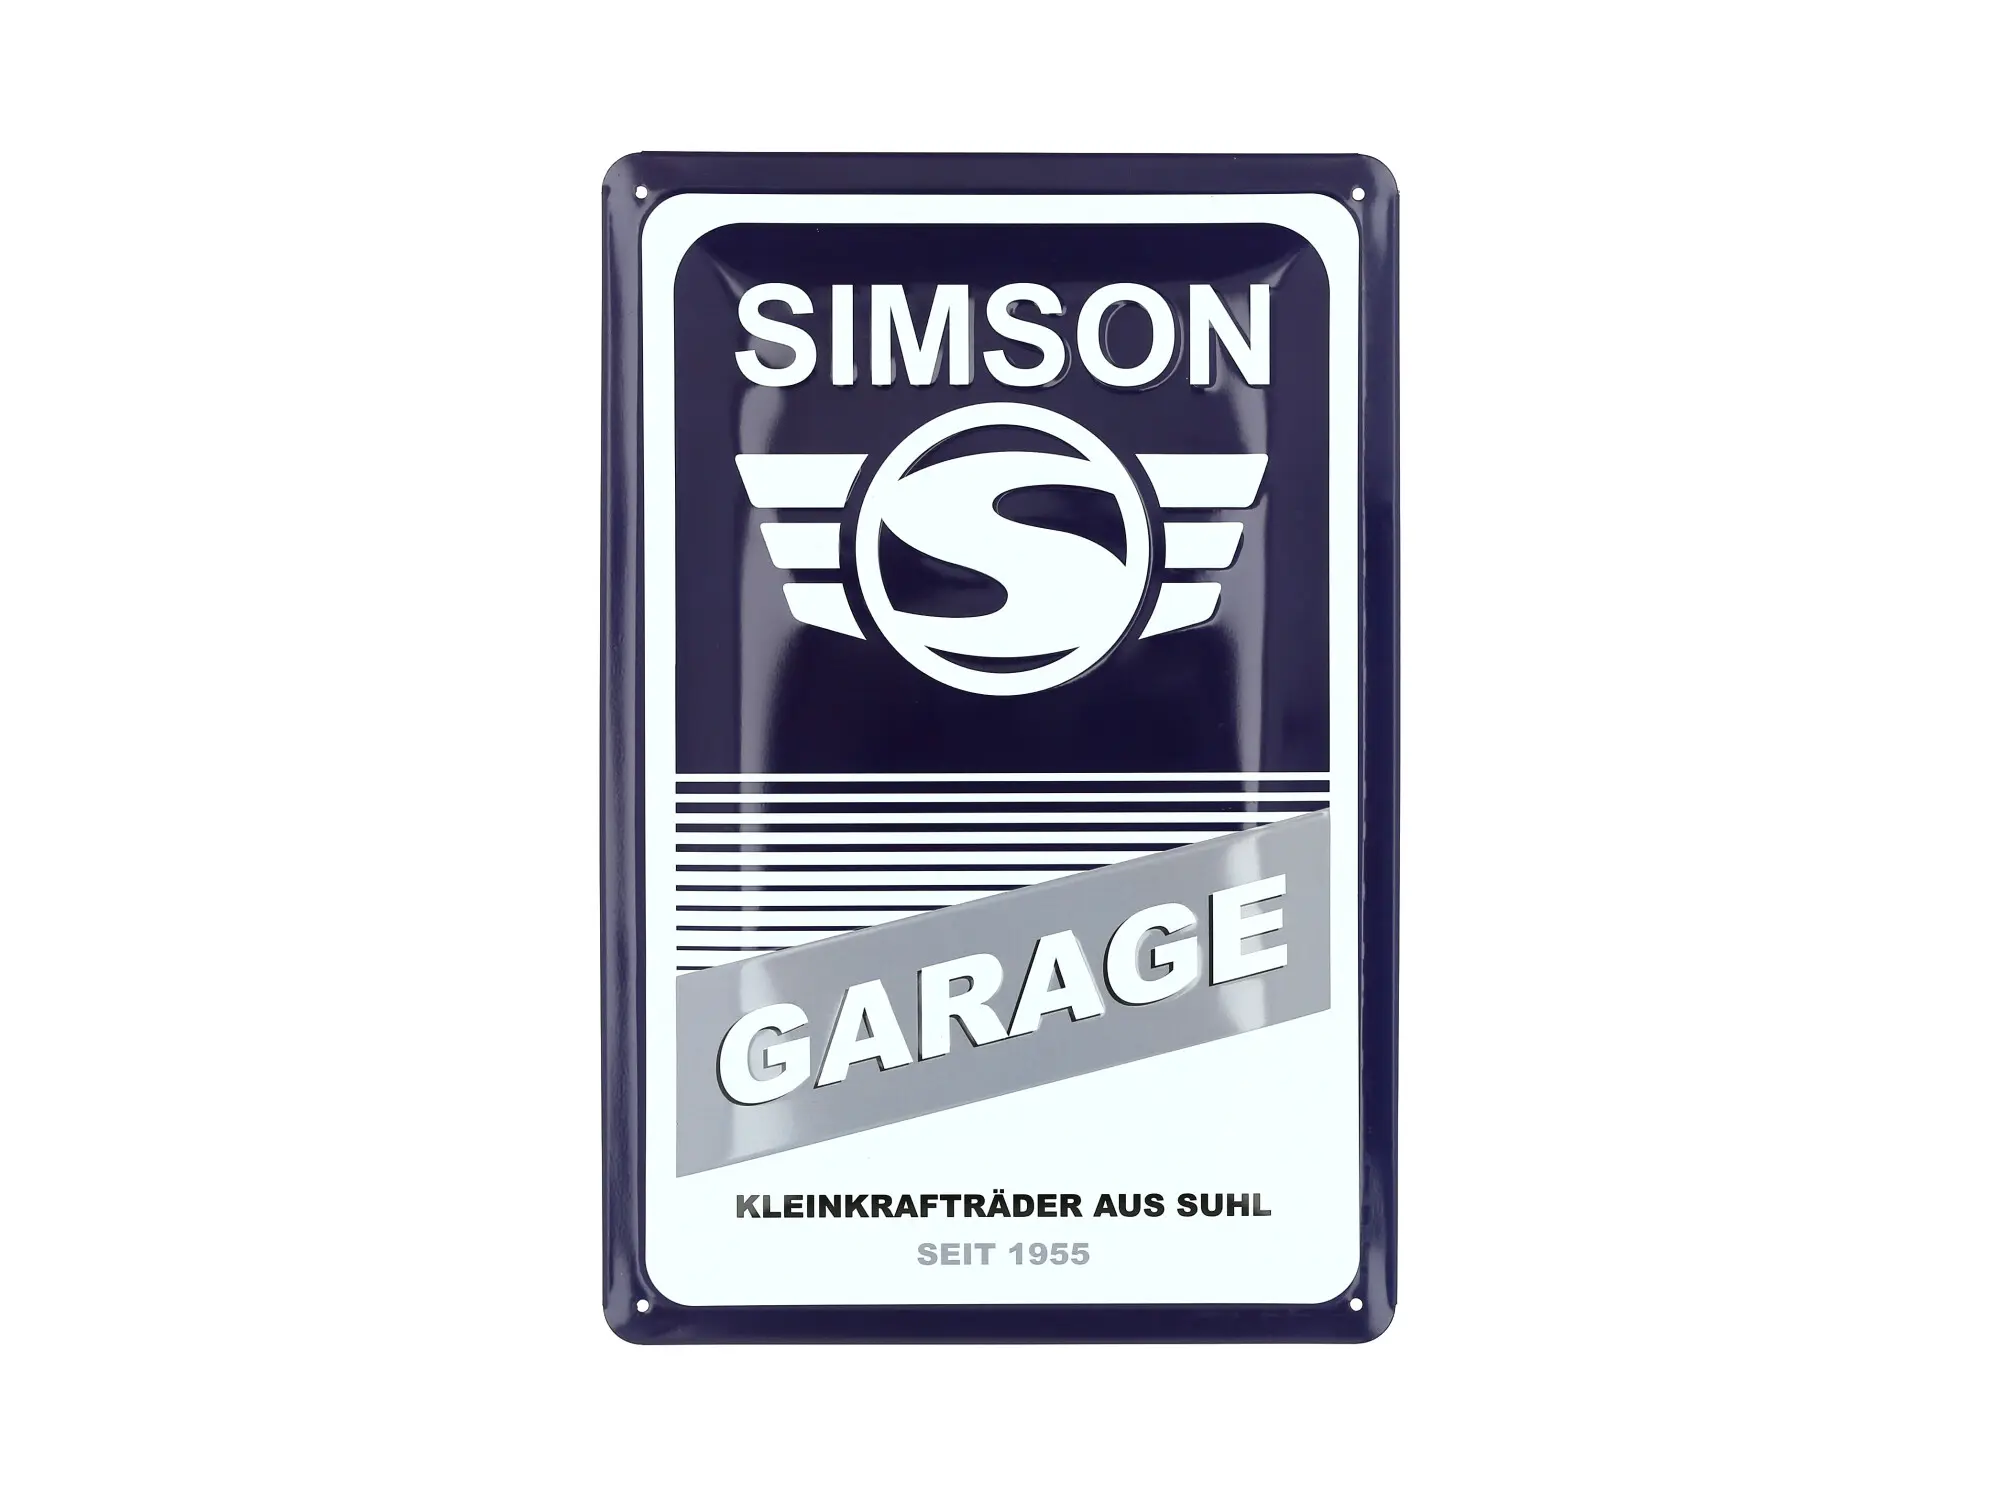 Blechprägeschild "SIMSON-Garage" 20x30 cm, blau/weiß, Art.-Nr.: 10070951 - Bild 1